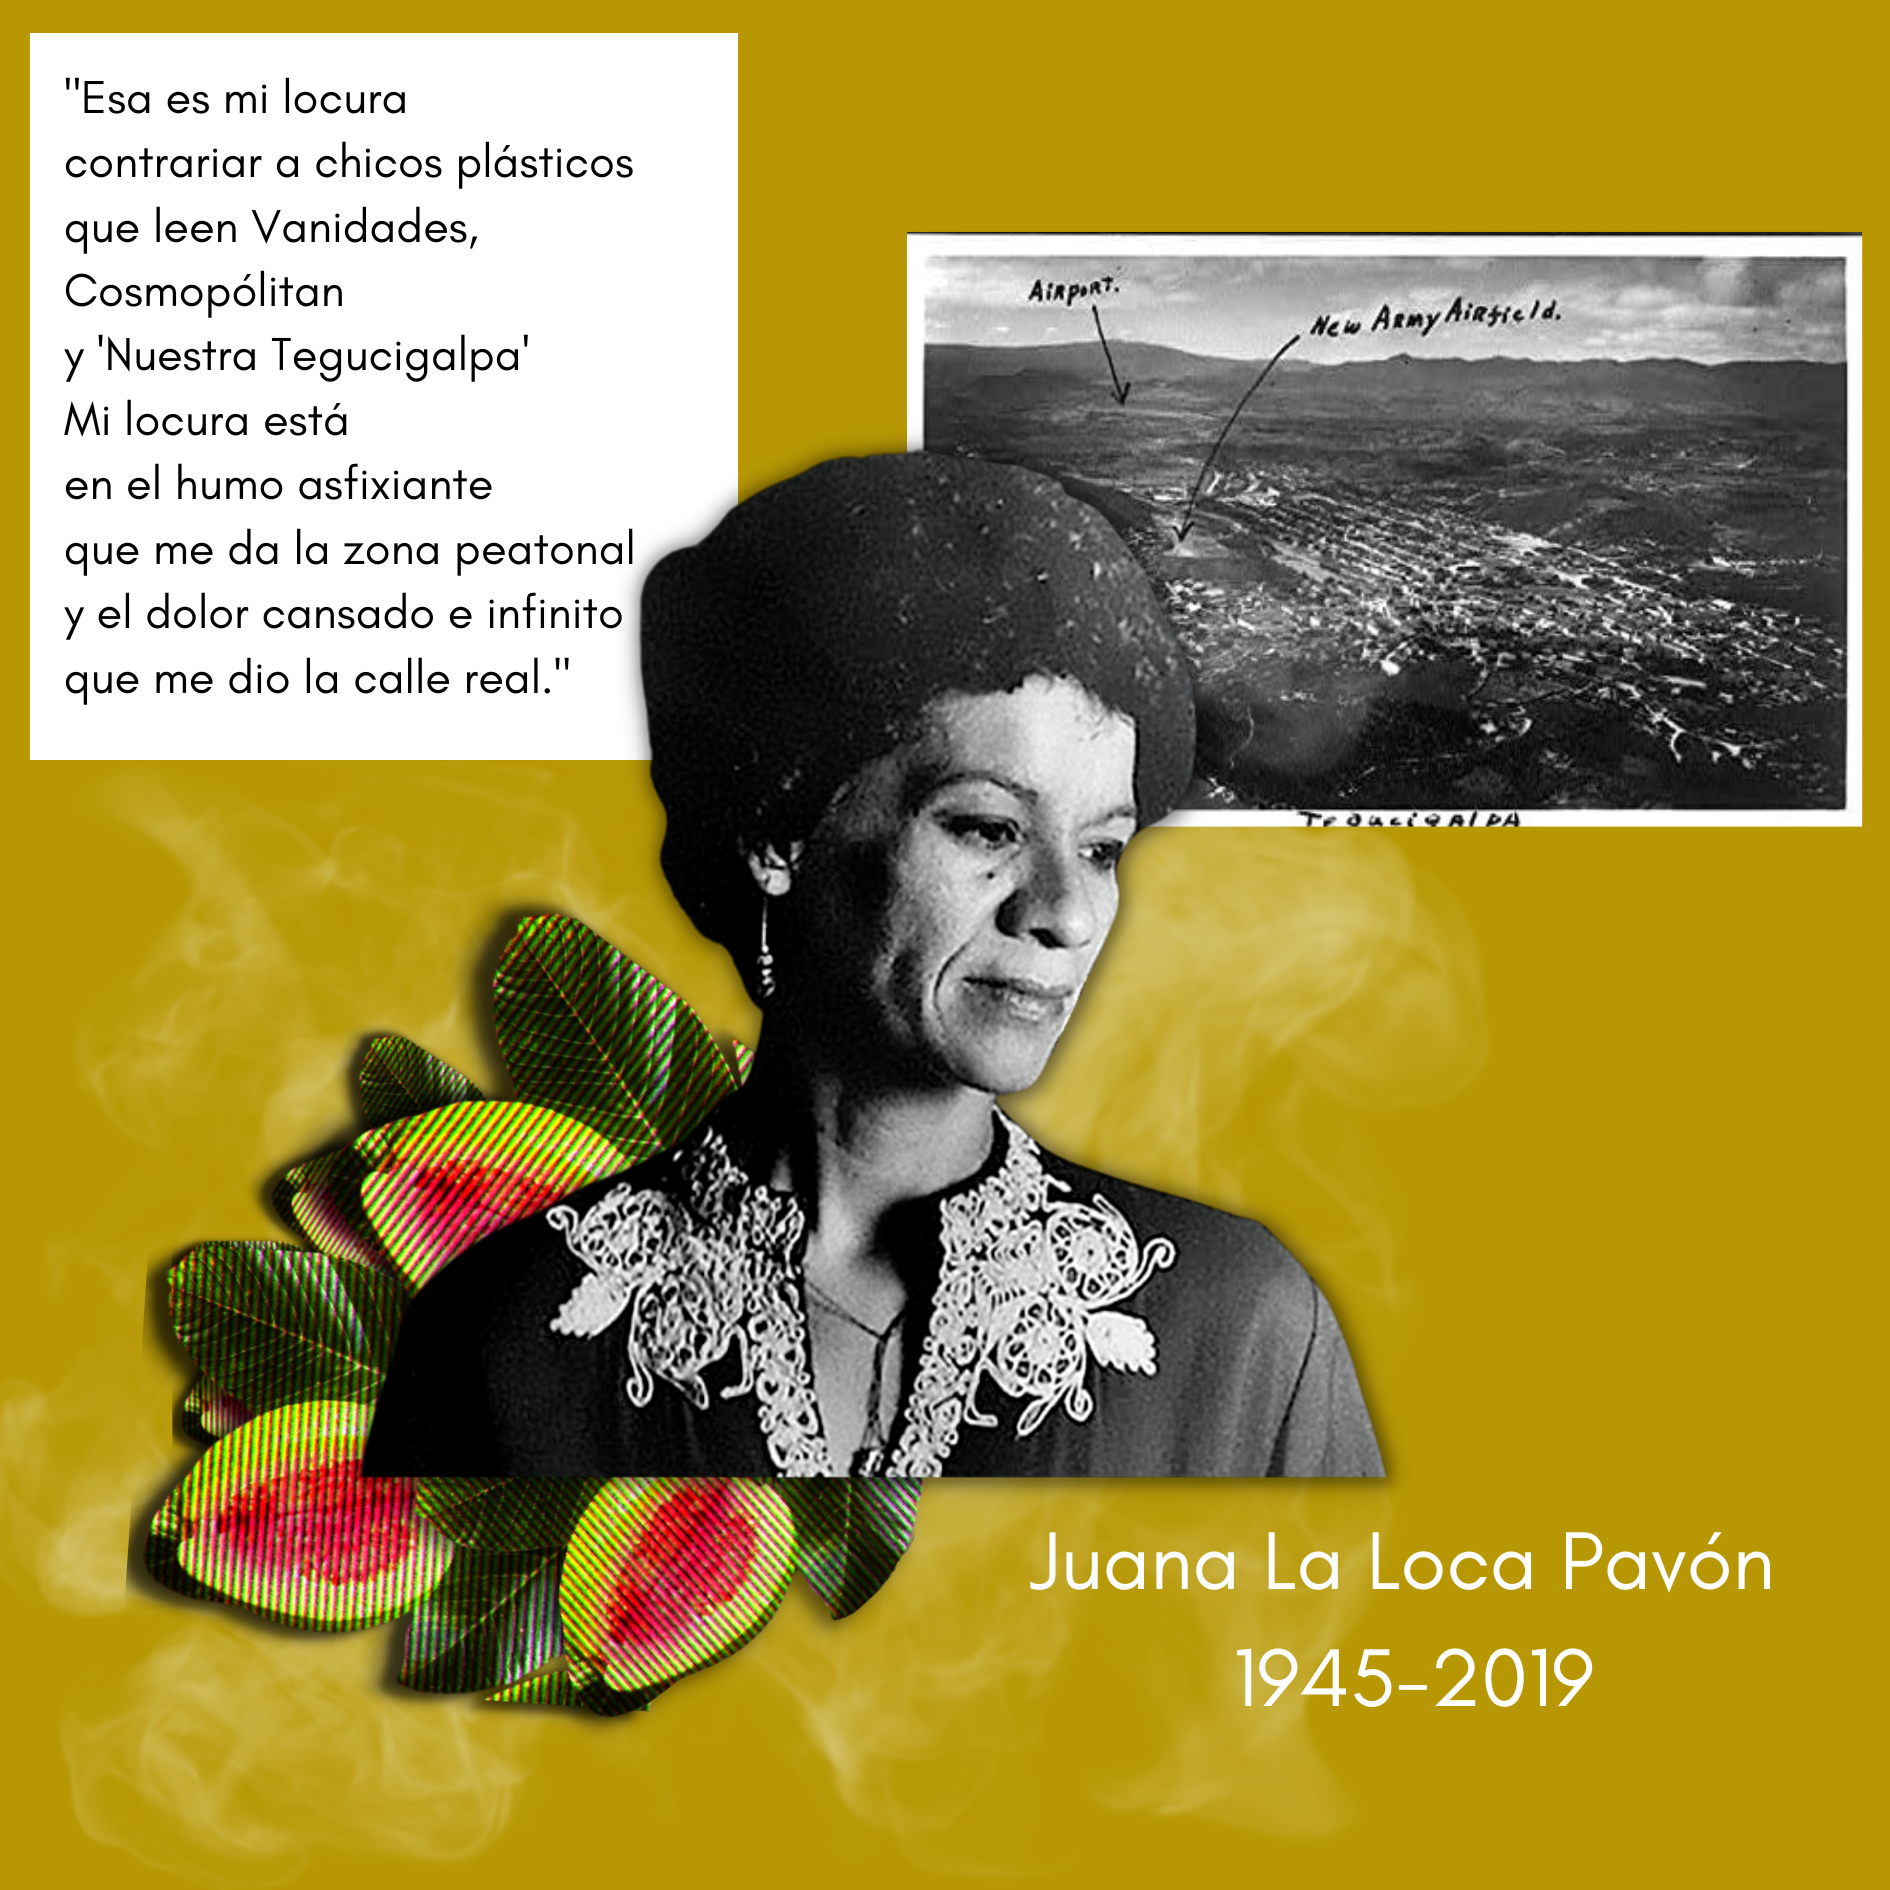 Juana La Loca Pavon.png